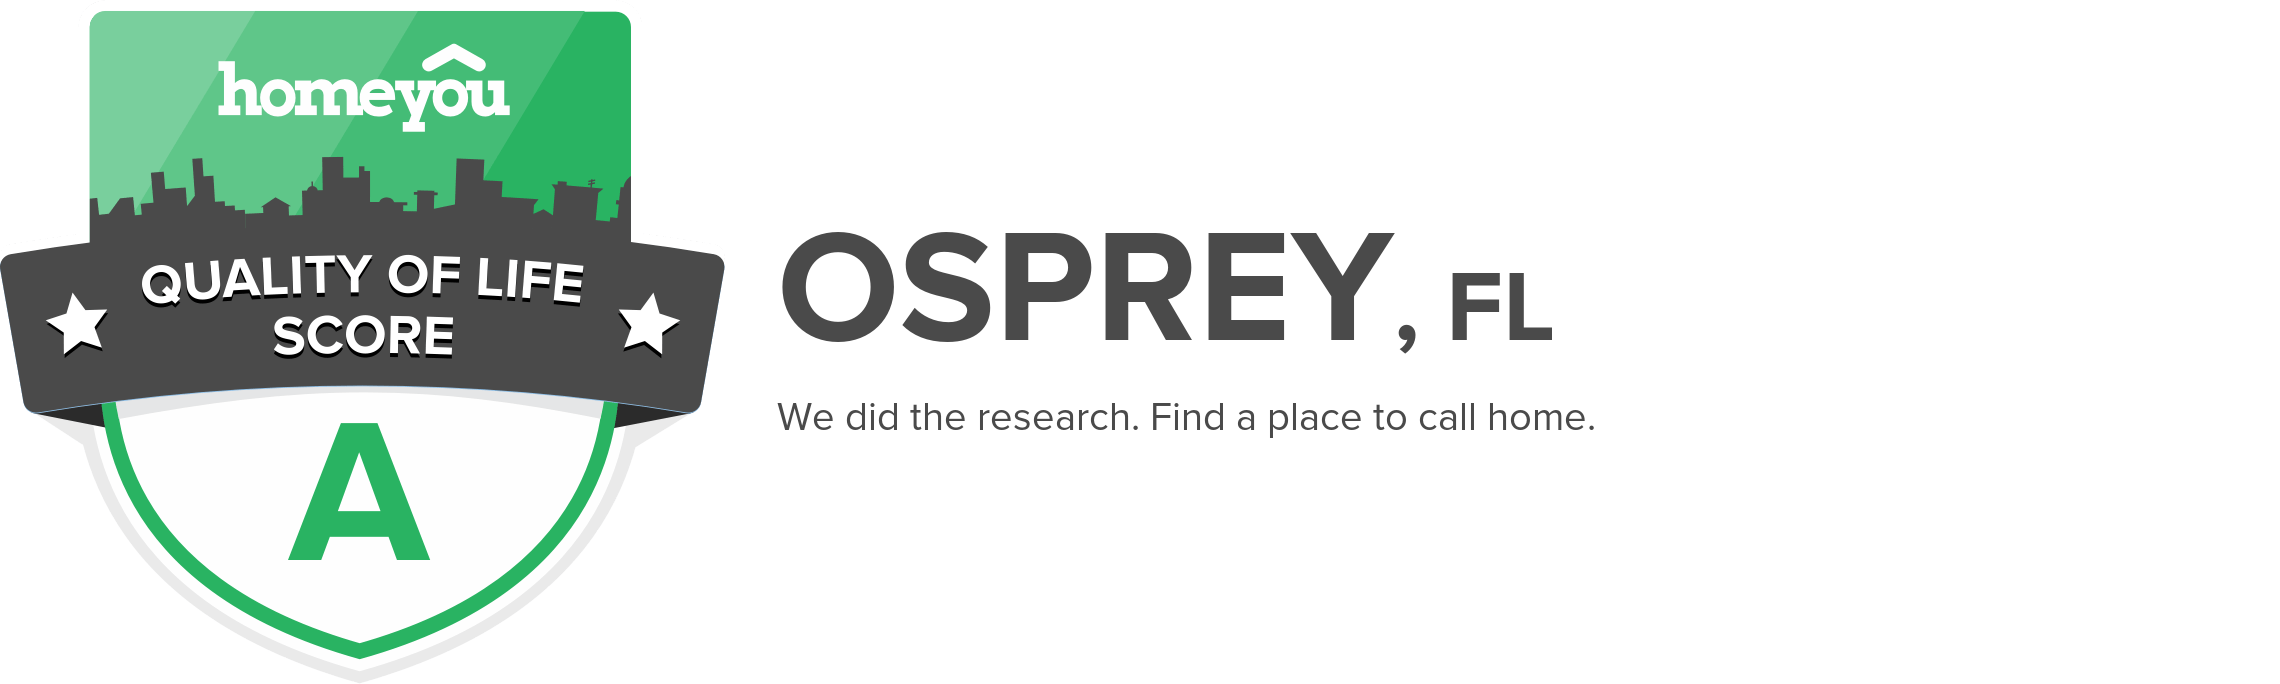 Osprey, FL